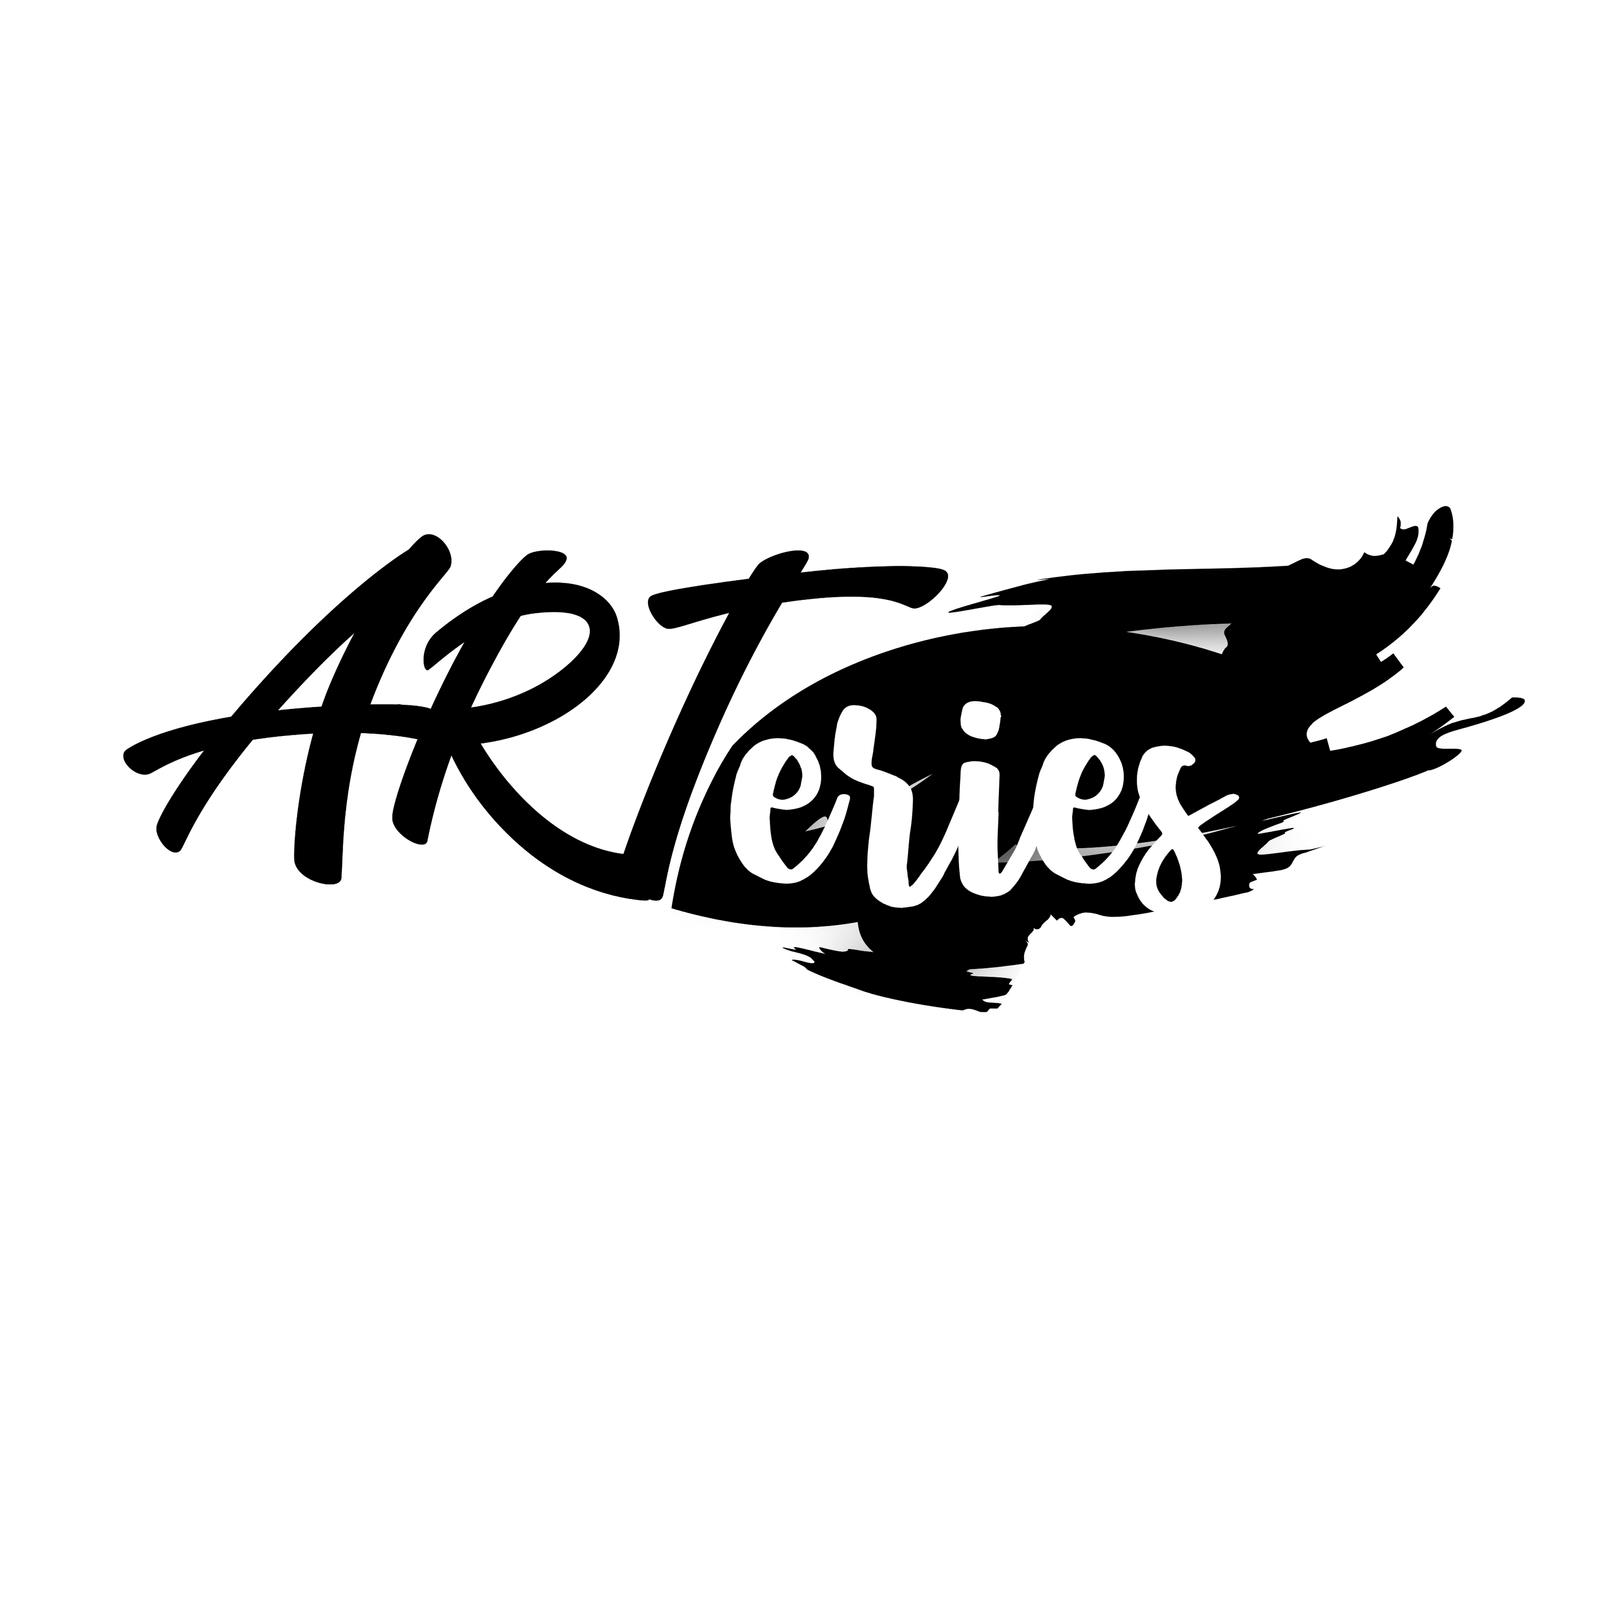 Arteries logo-black